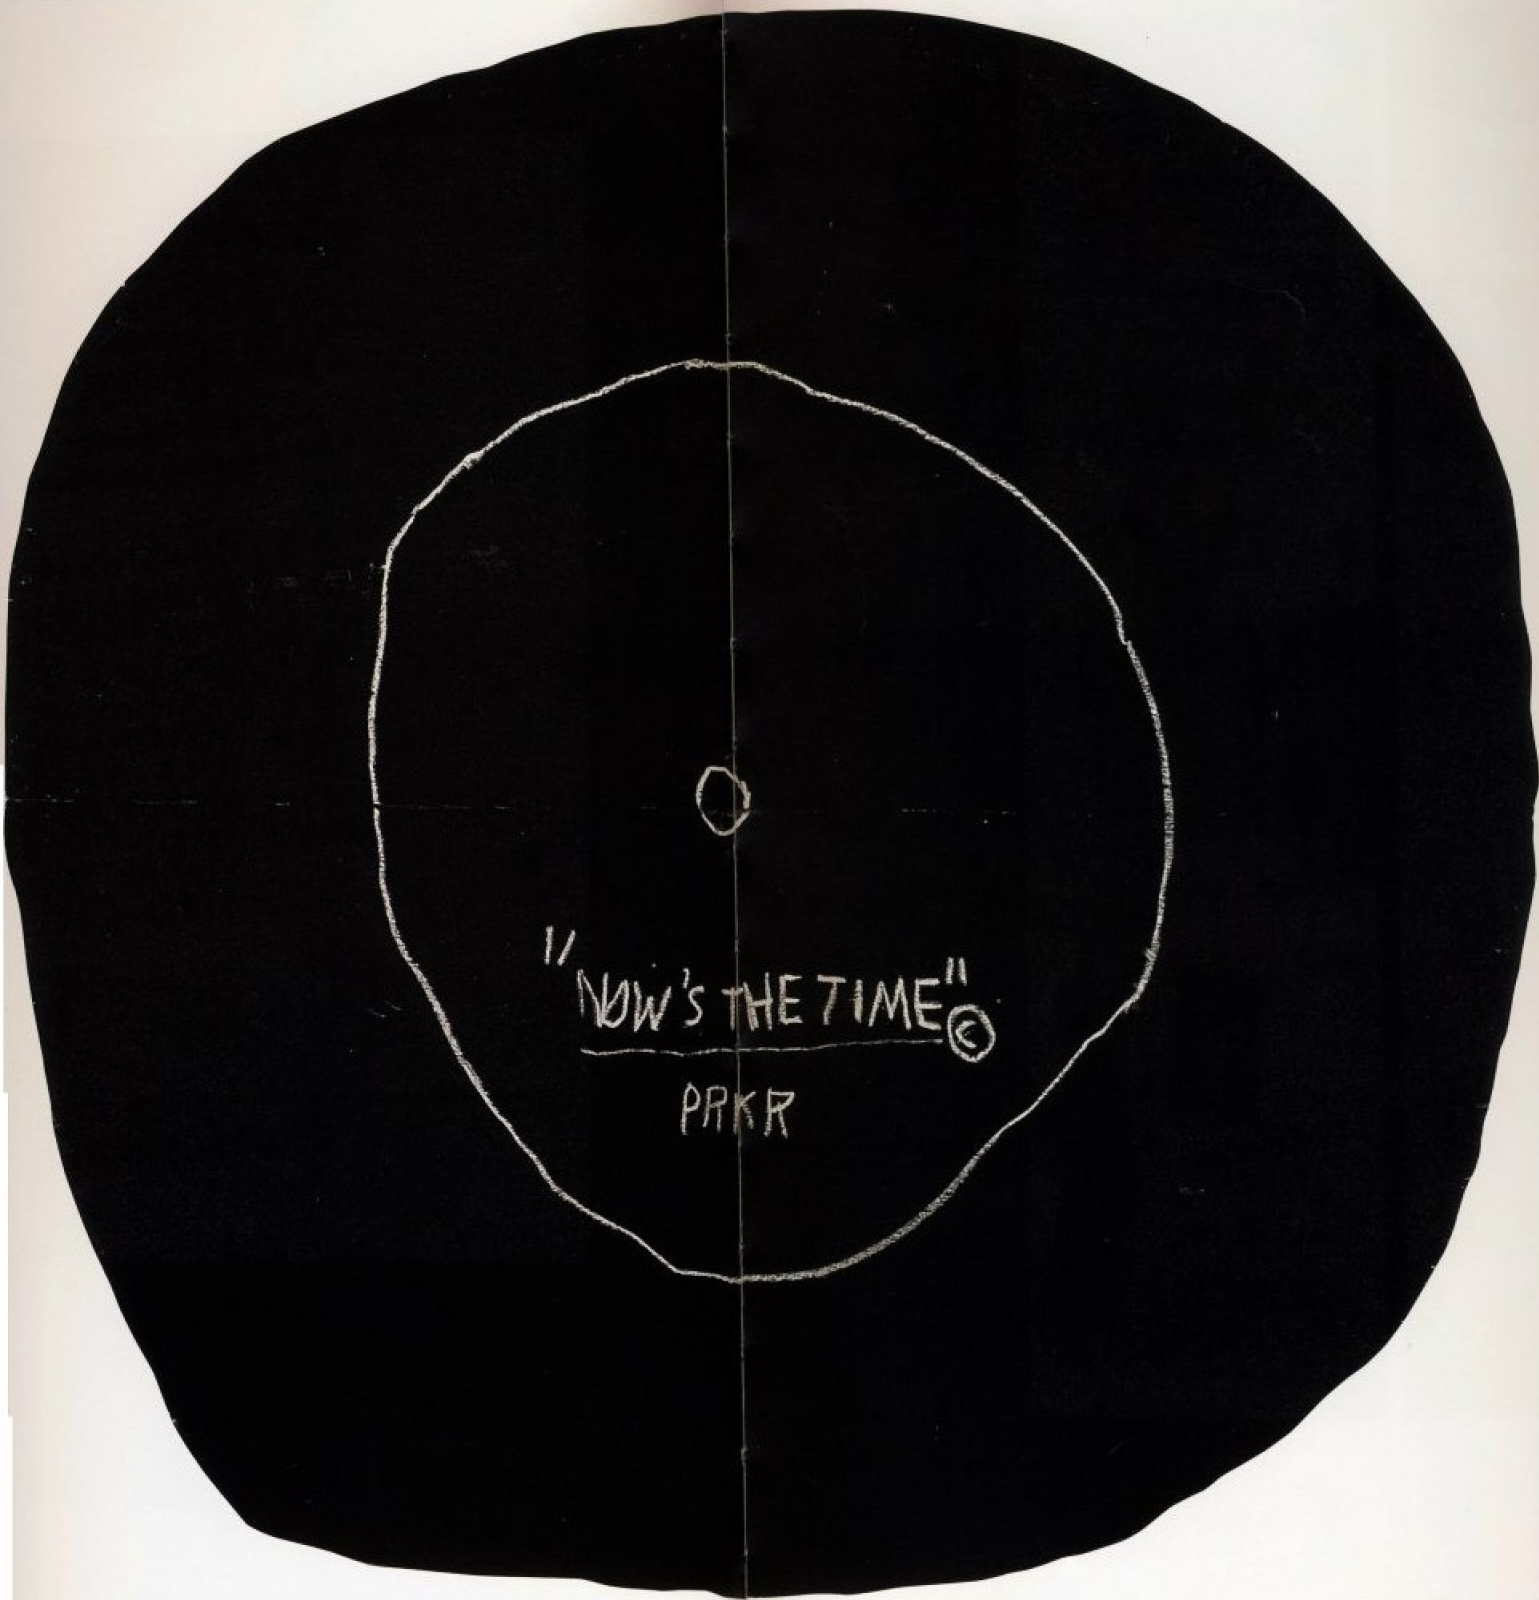 Jean-Michel Basquiat. The moment